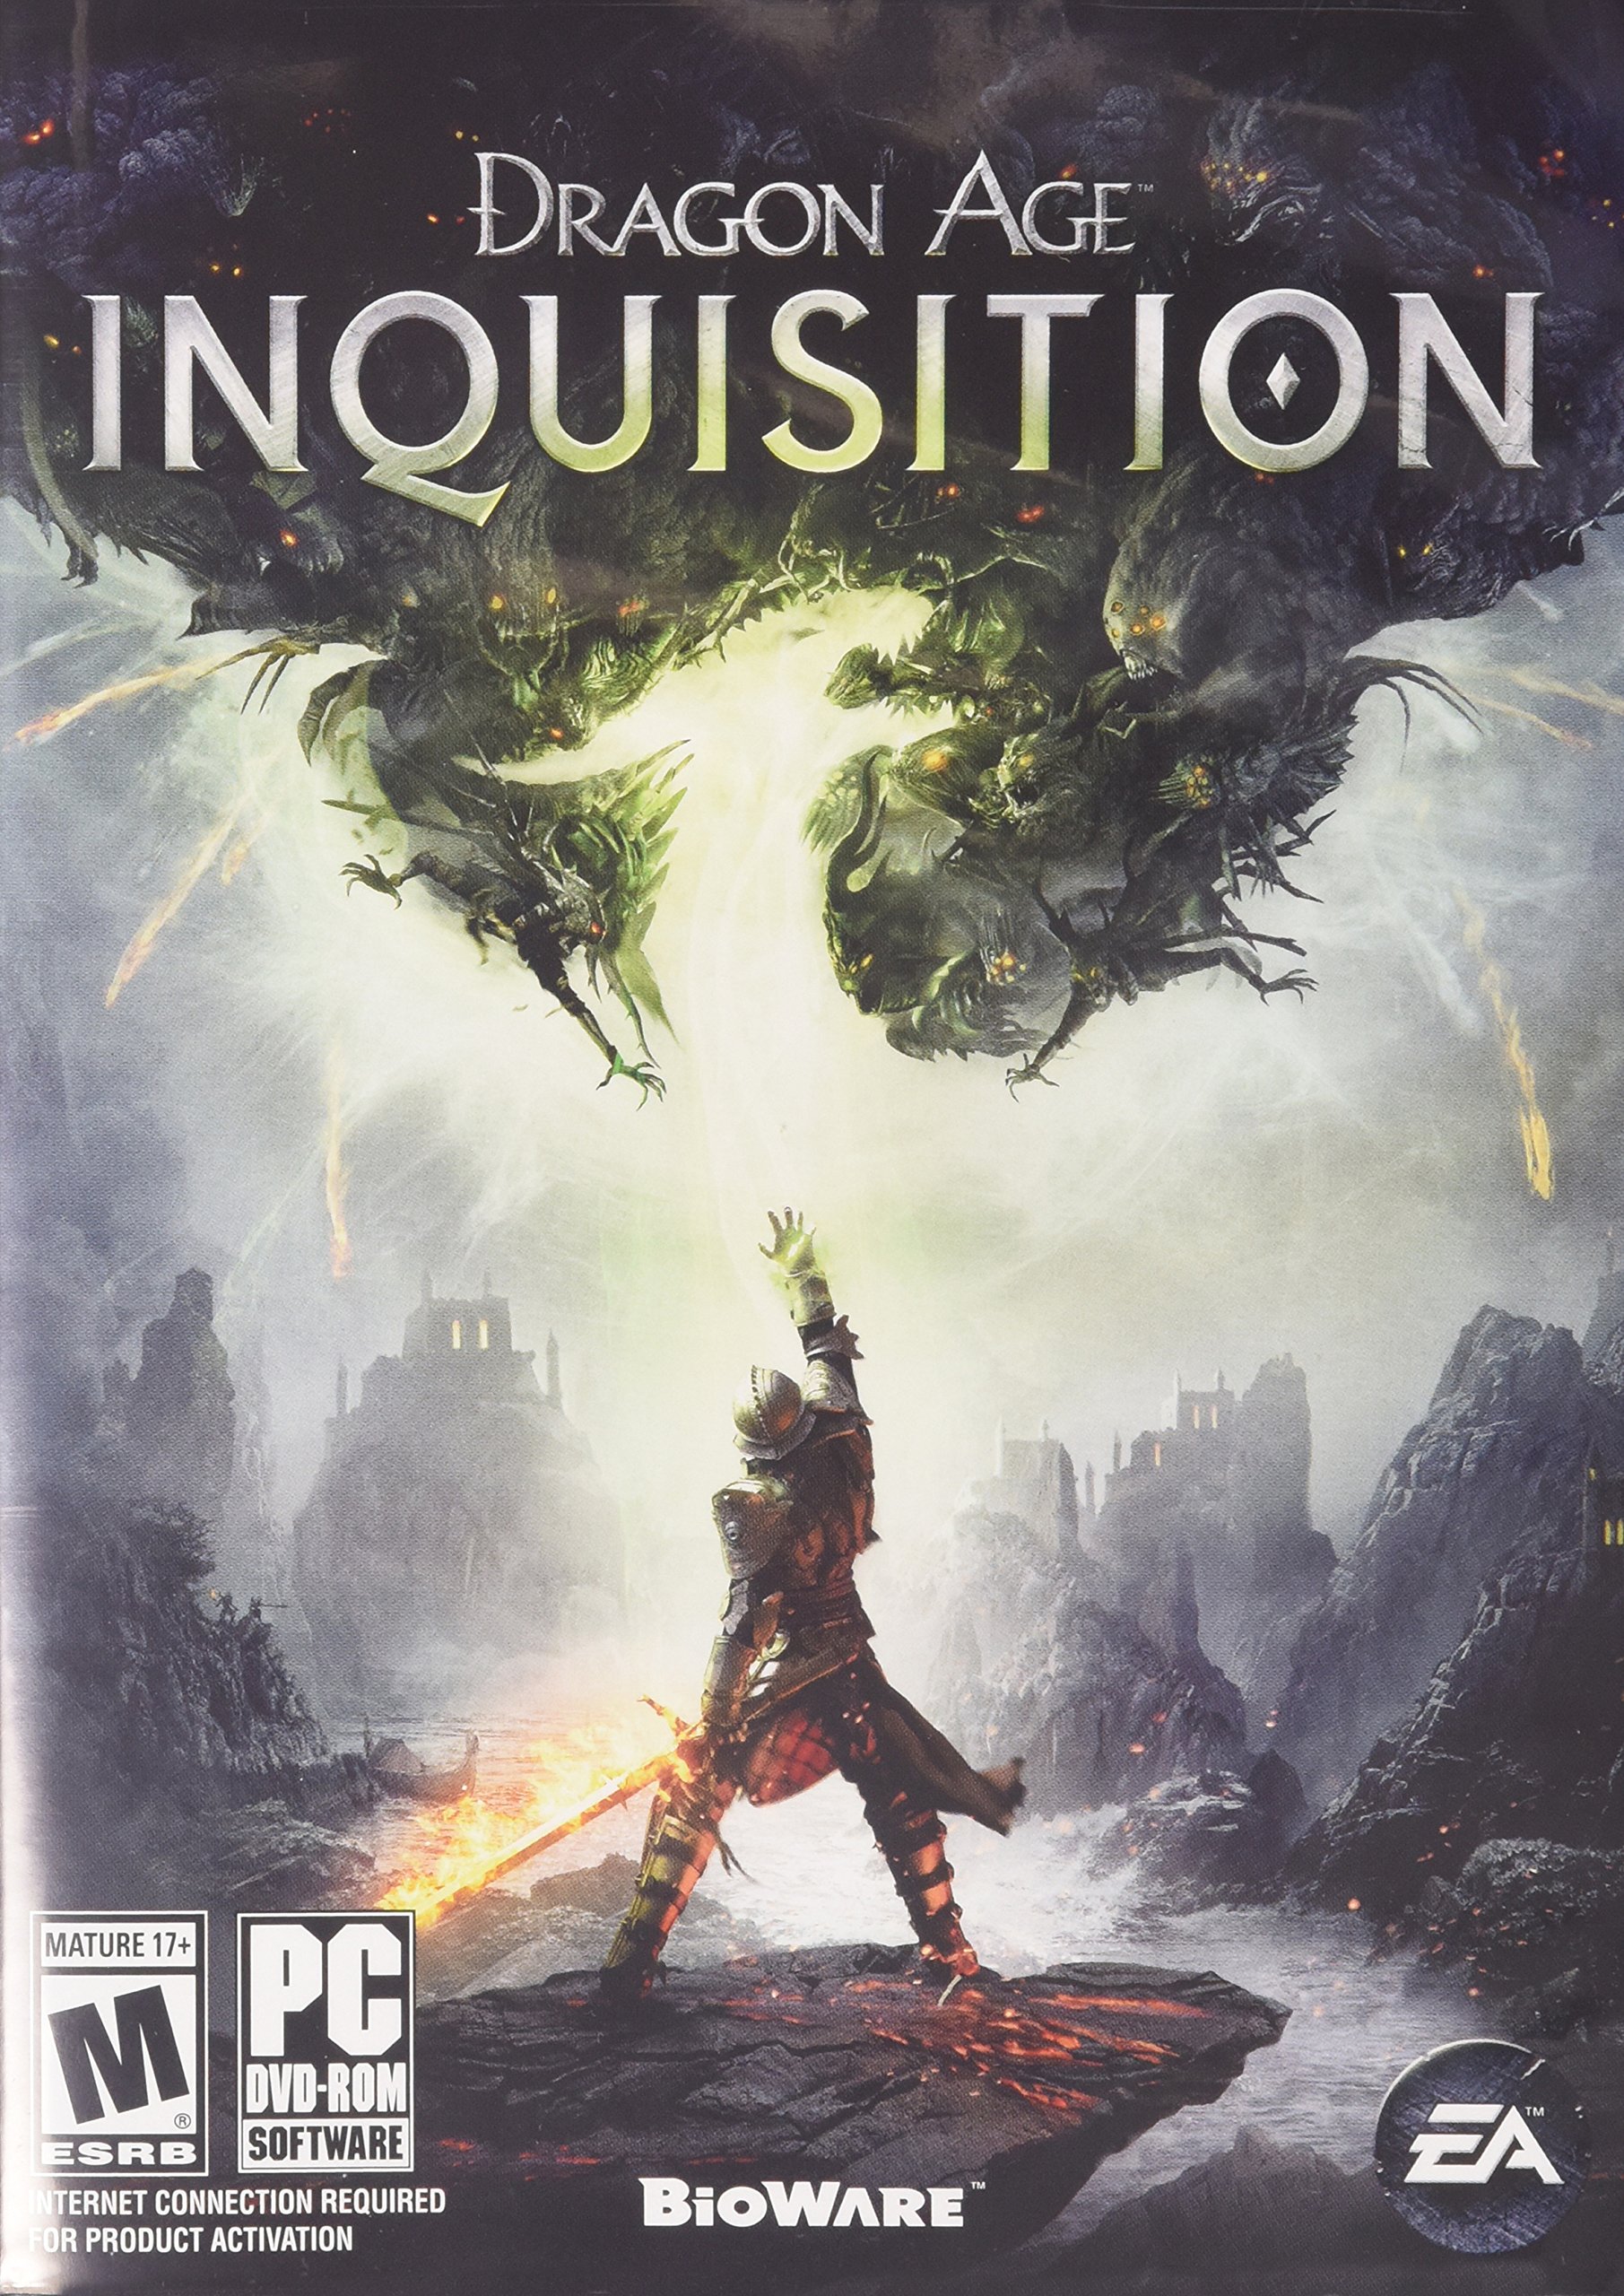 Dragon Age Inquisition - Standard Edition - PC